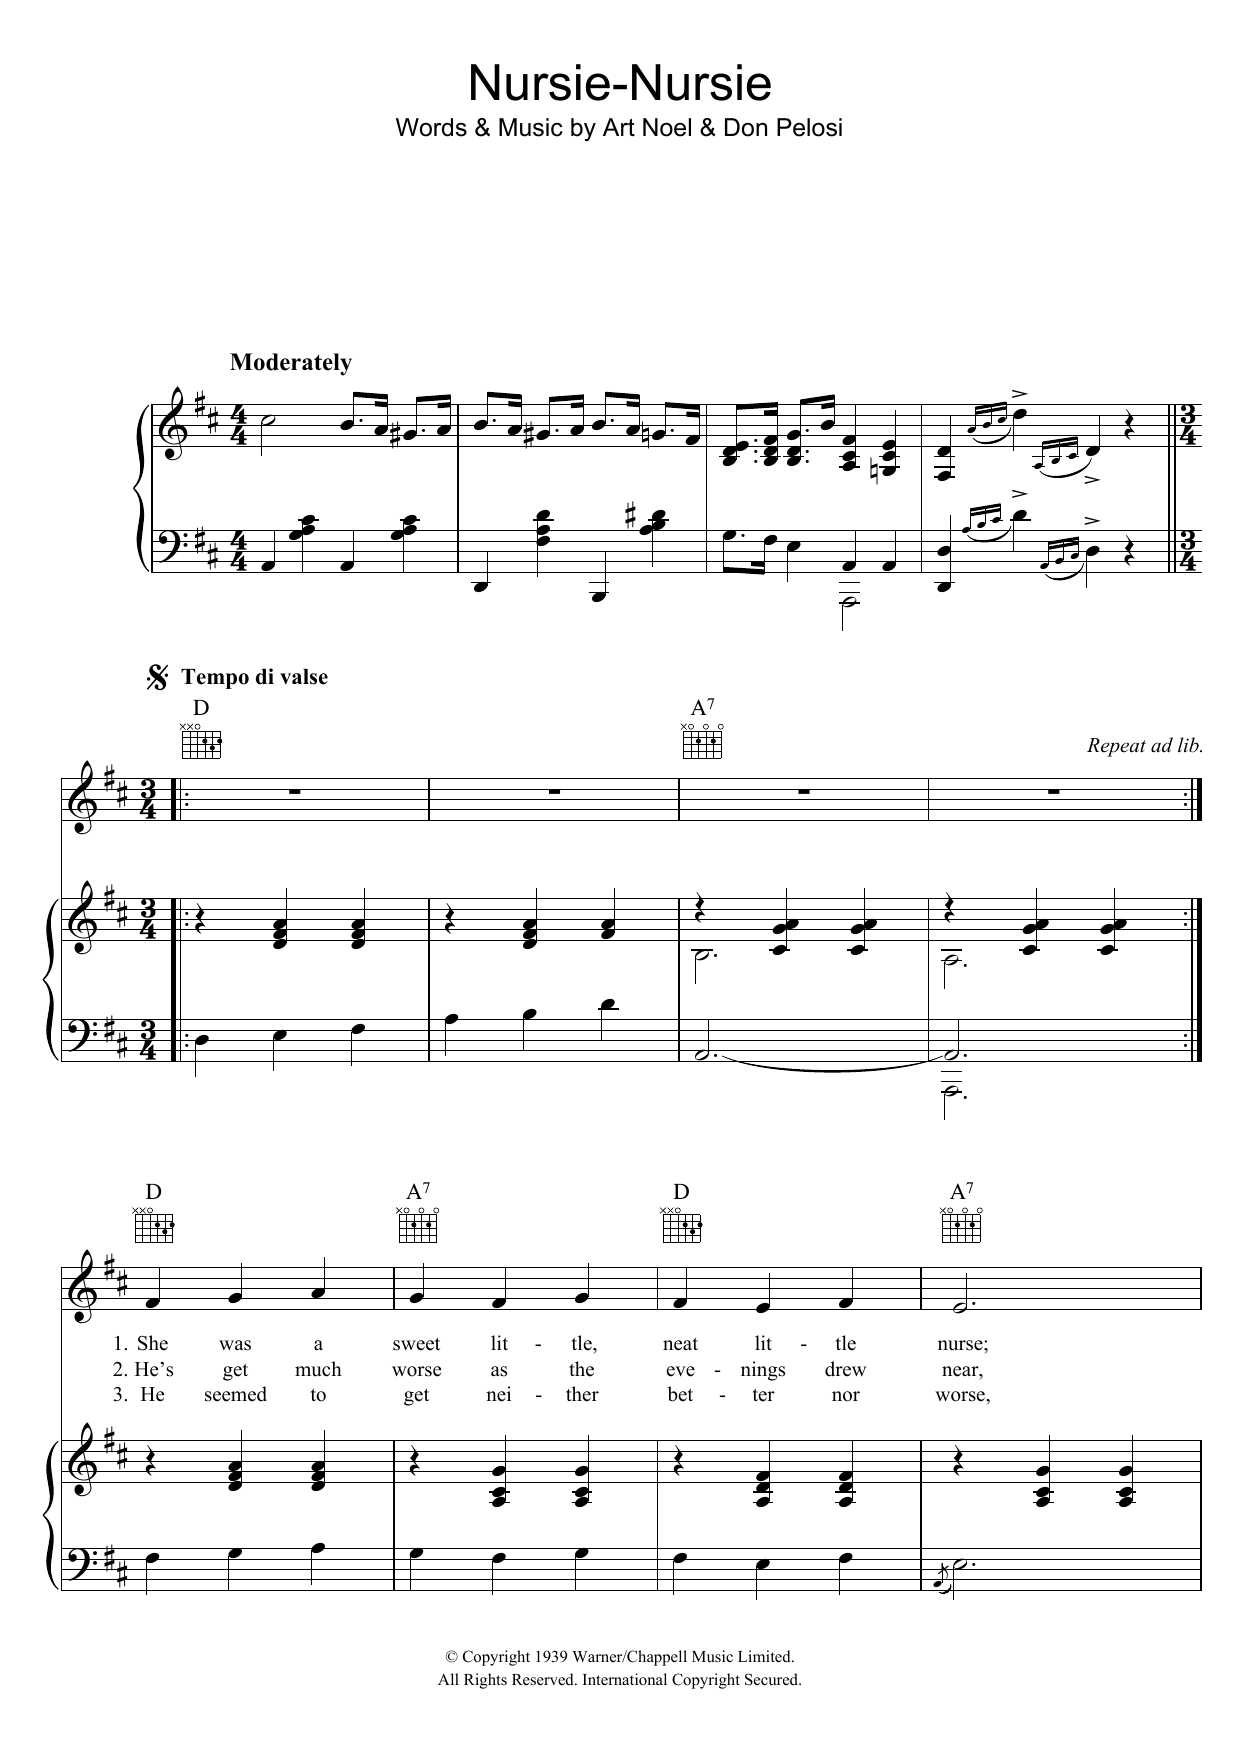 Elsie Carlisle Nursie Nursie Sheet Music Notes & Chords for Piano, Vocal & Guitar (Right-Hand Melody) - Download or Print PDF